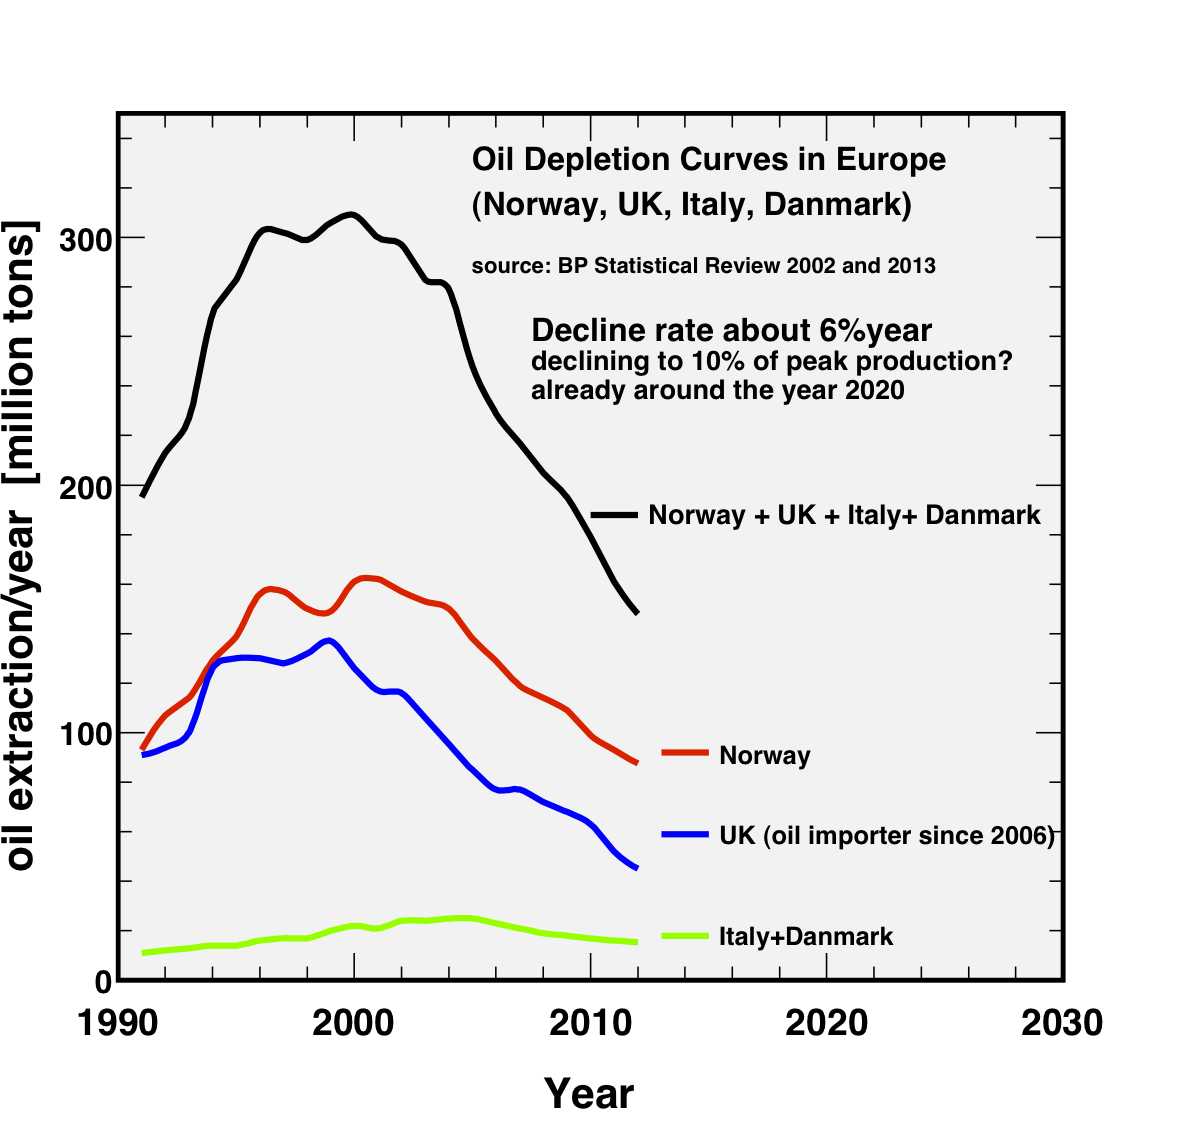 Vergrösserte Ansicht: Graphe showing Oil Depletion Curves in Europe